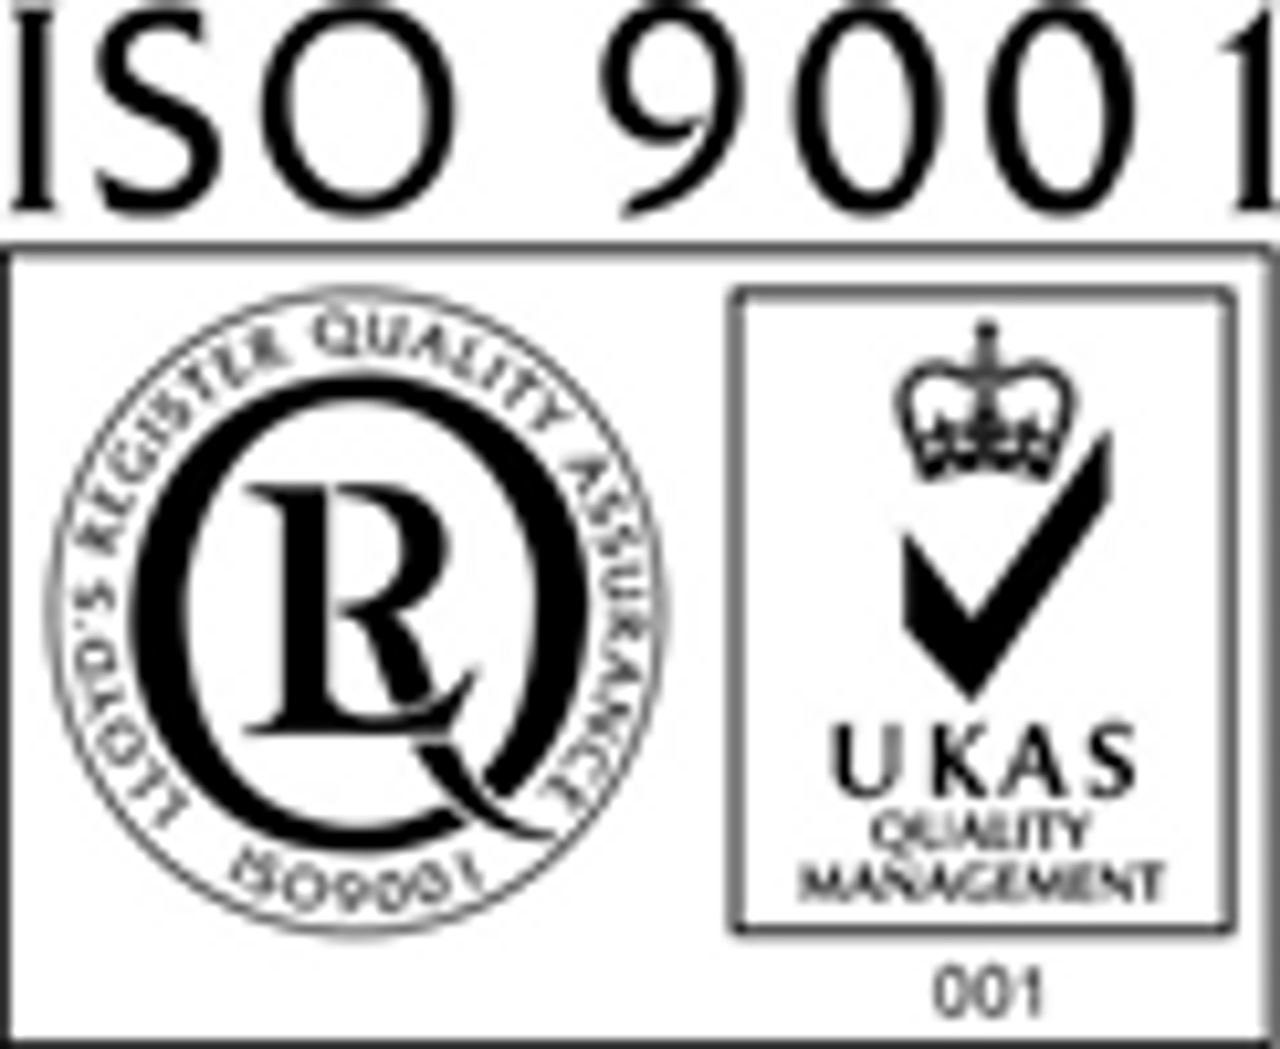 K4-30.0KW PHASOR MARINE GENERATOR COMPACT 30,000 WATTS KEEL COOLED / DRY EXHAUST